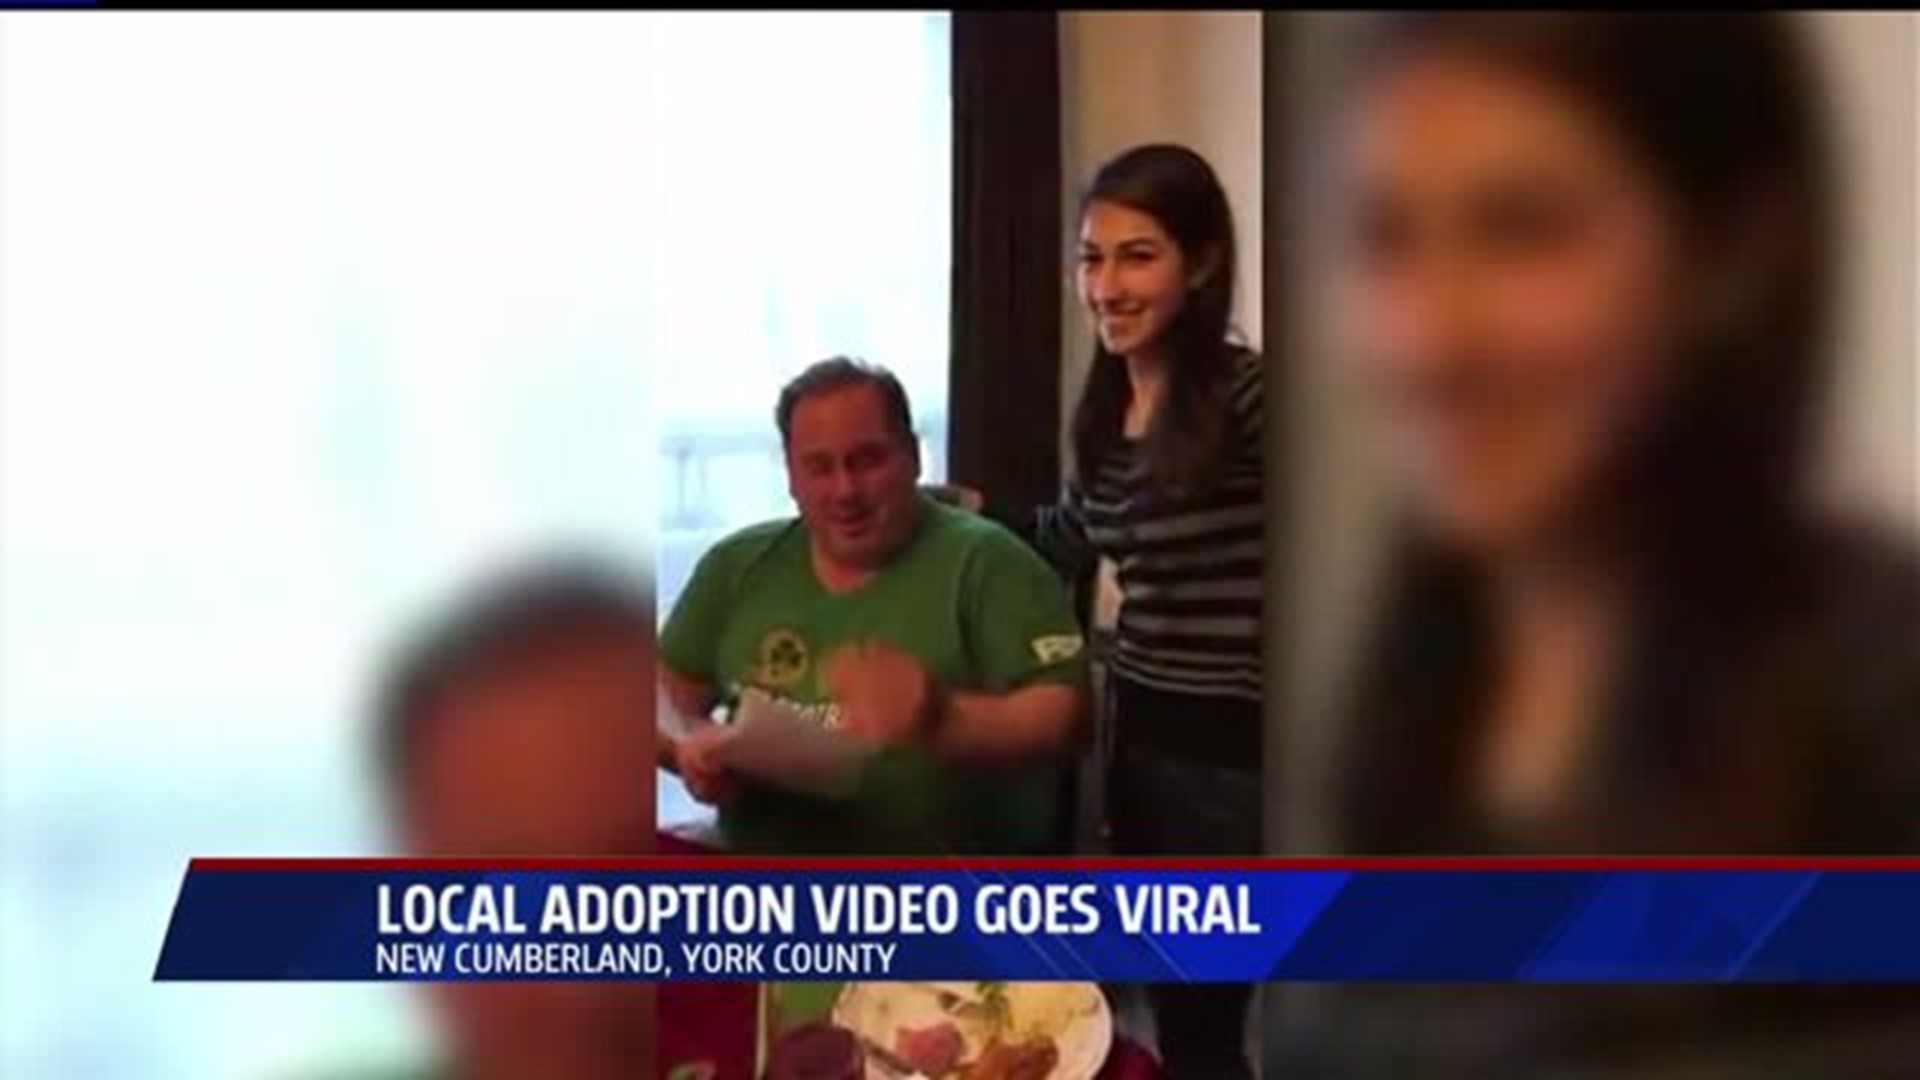 Local adoption video goes viral this holiday season